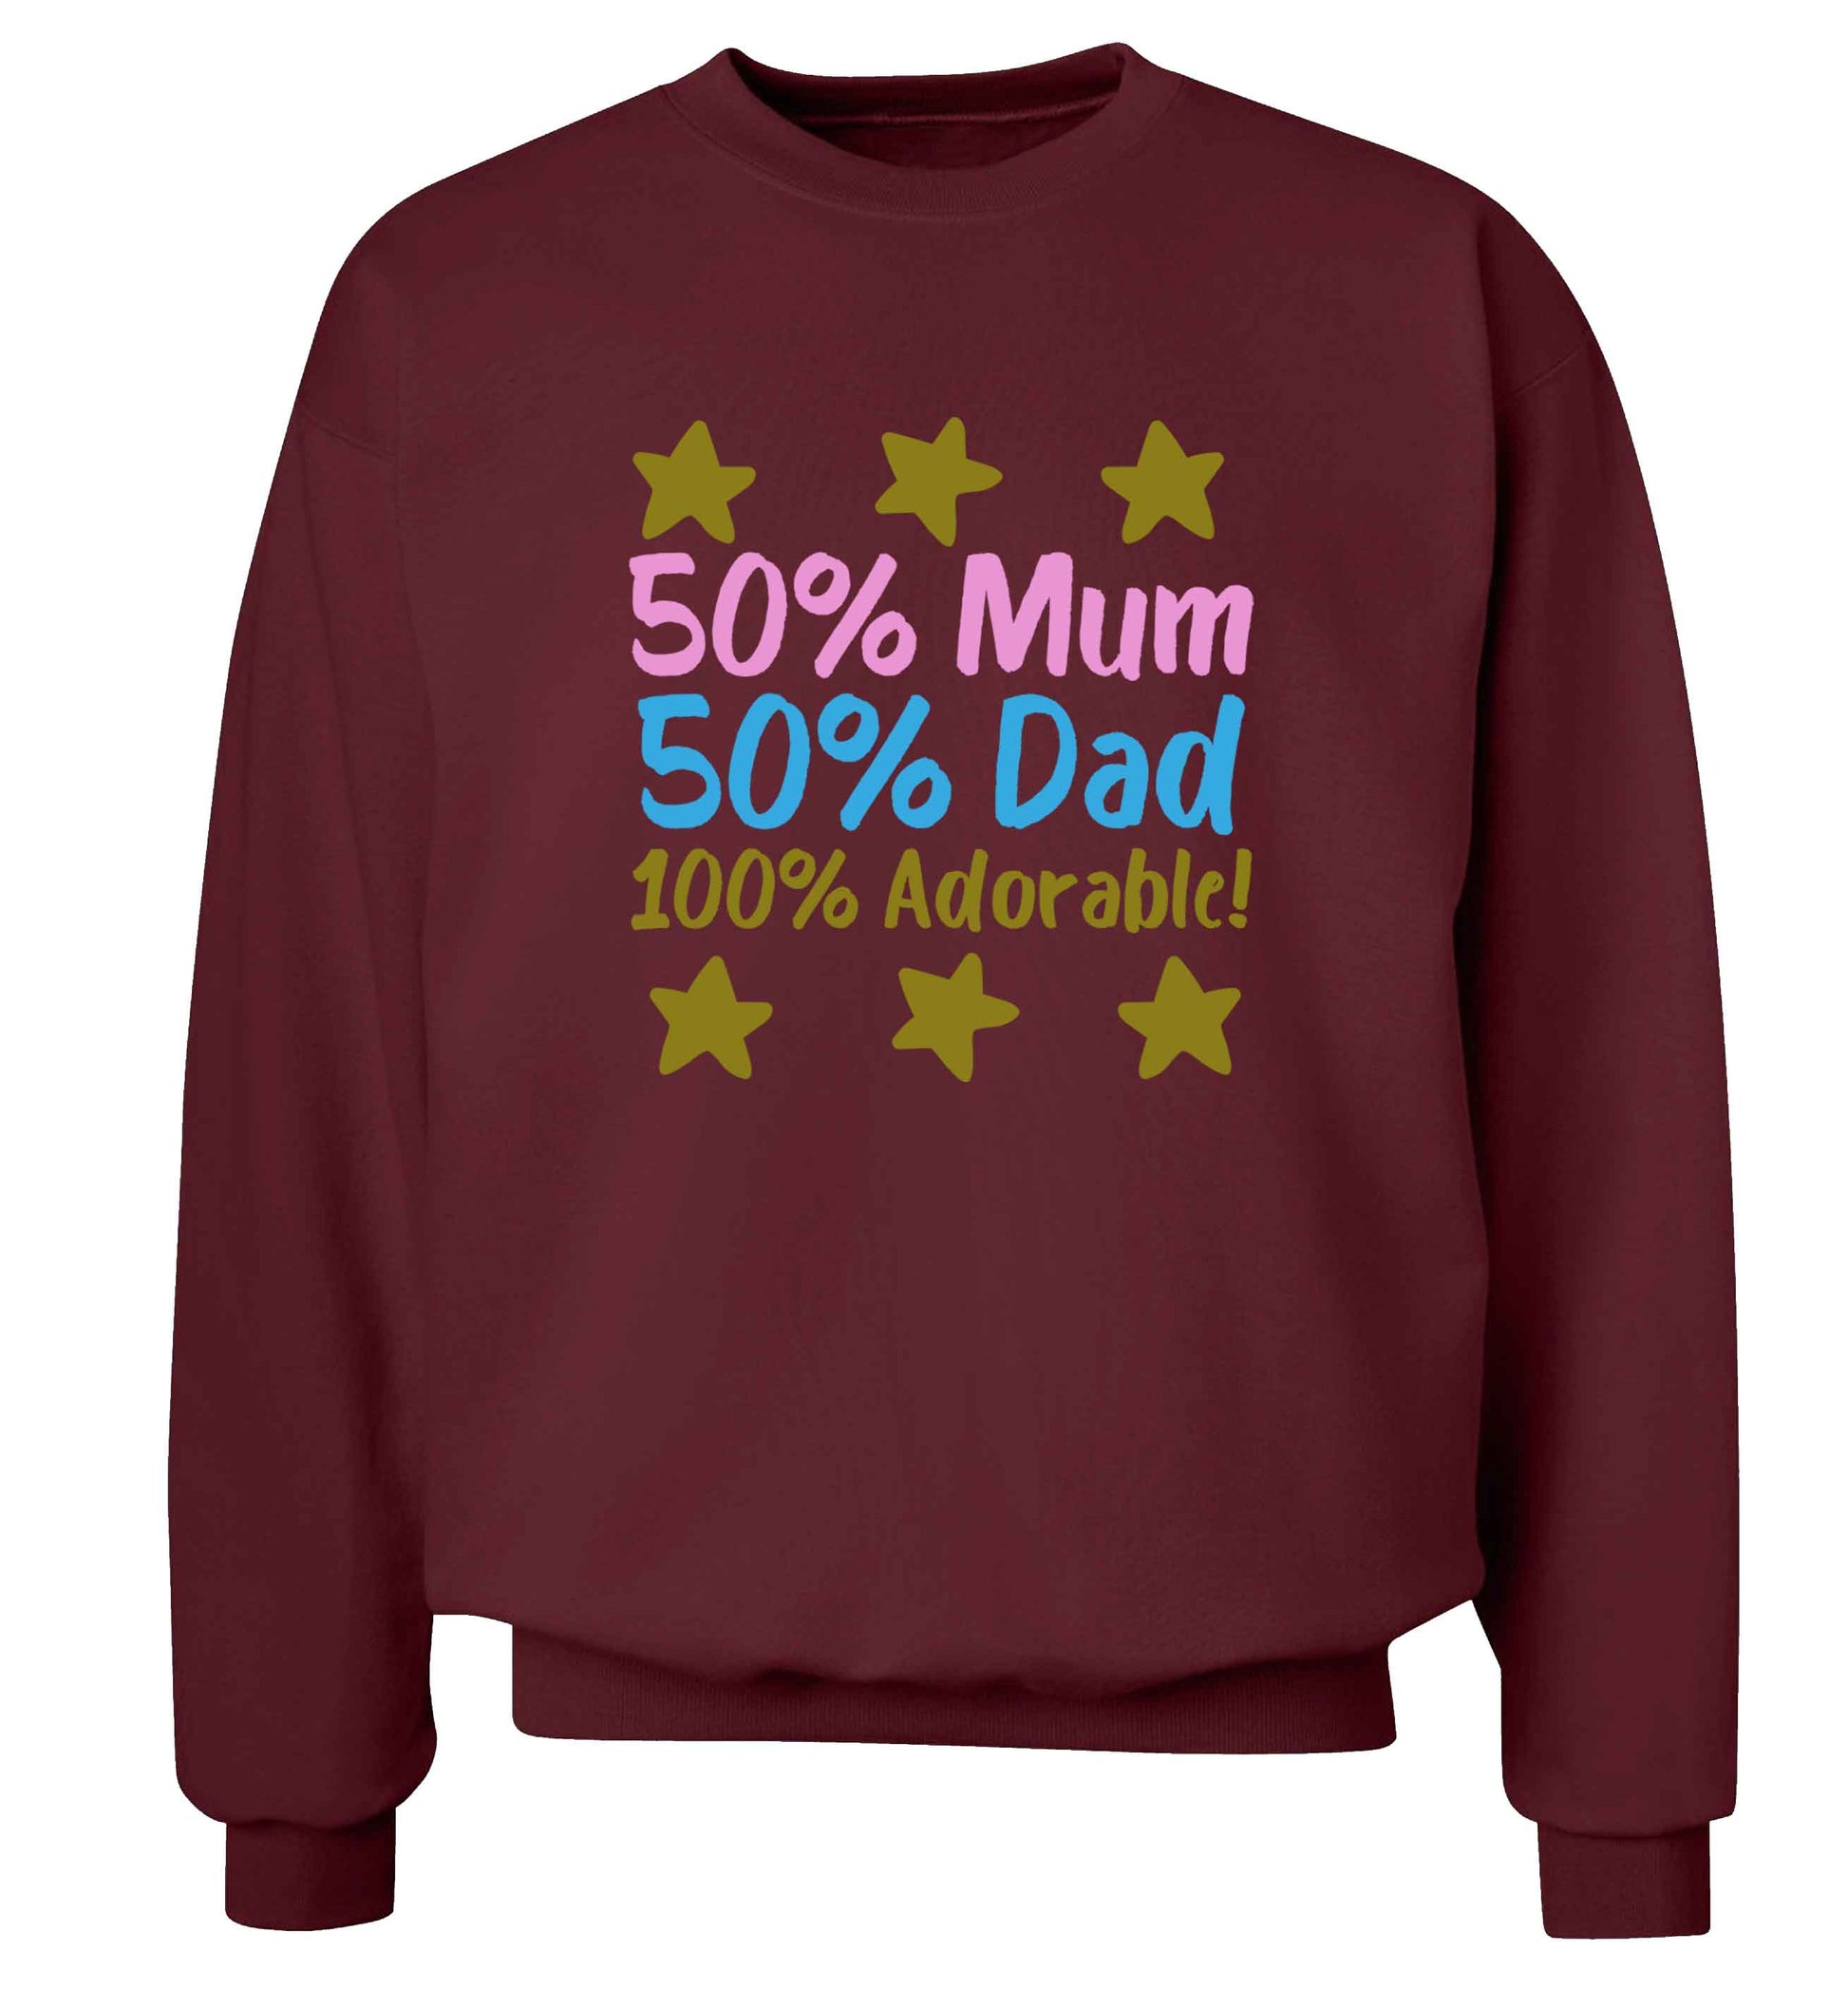 50% mum 50% dad 100% adorable adult's unisex maroon sweater 2XL